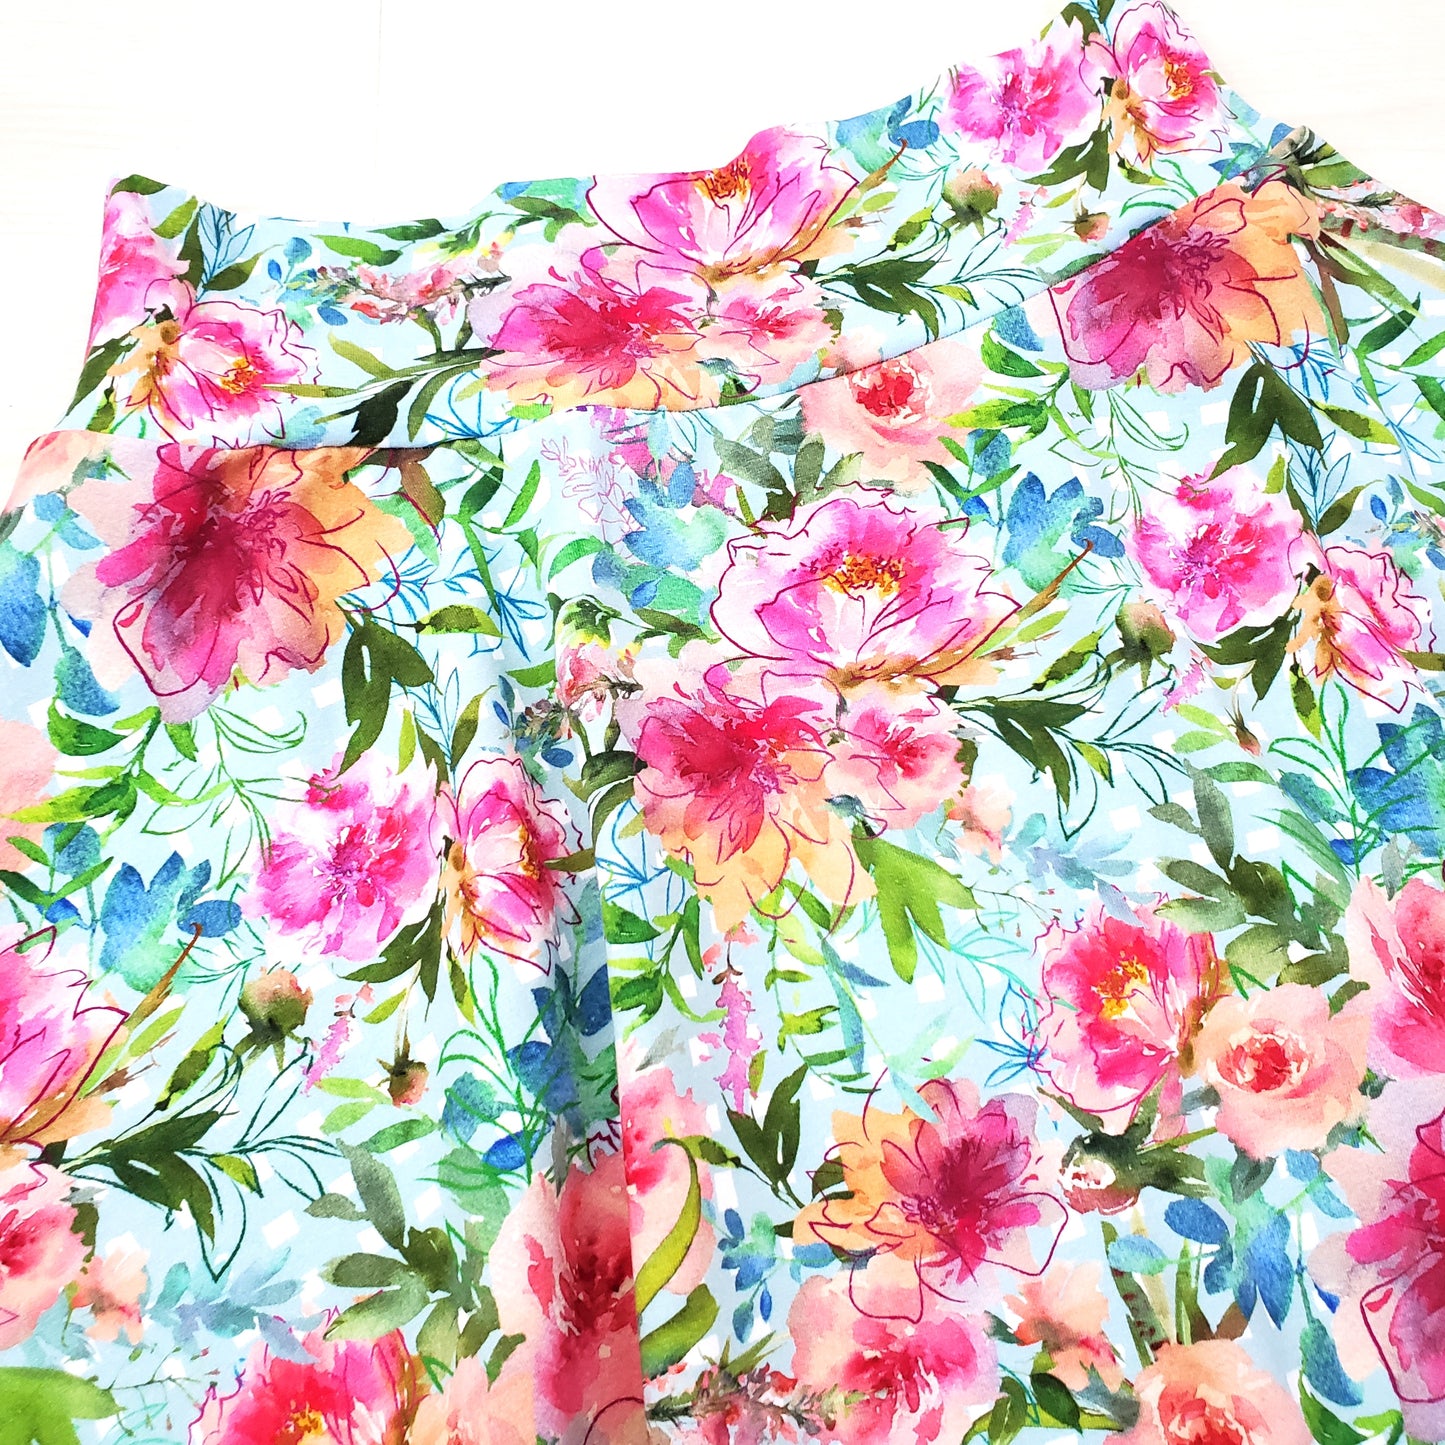 Women's Floral Swing Skirt in Organic Cotton Jersey